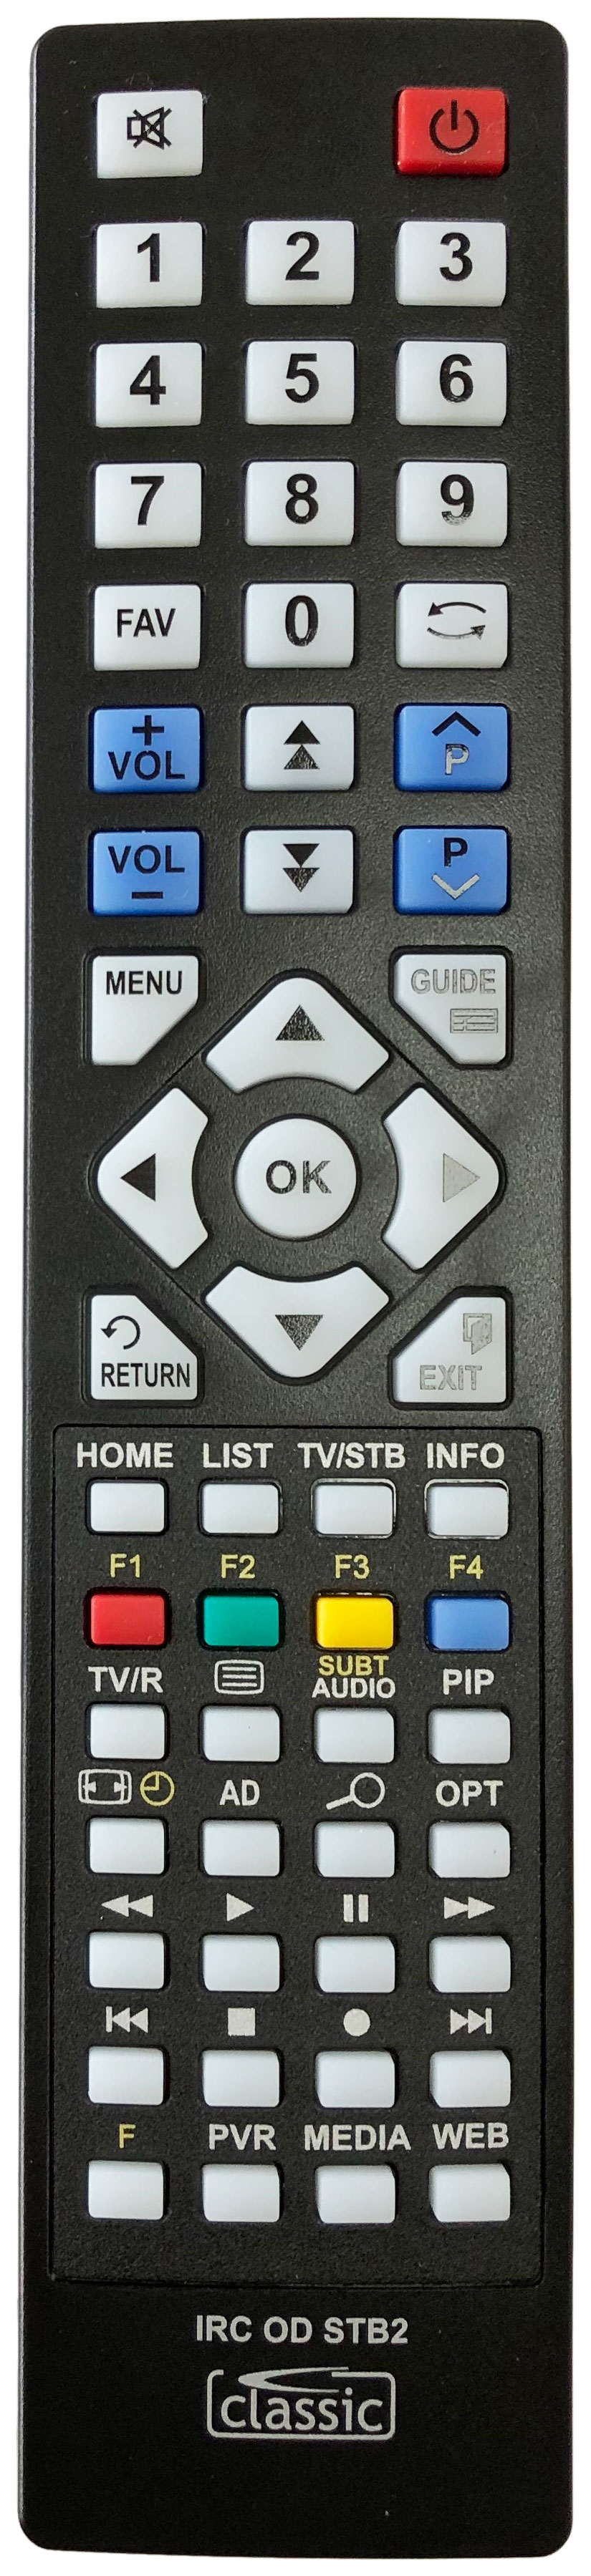 SAGEM DTR 6700T Remote Control Alternative